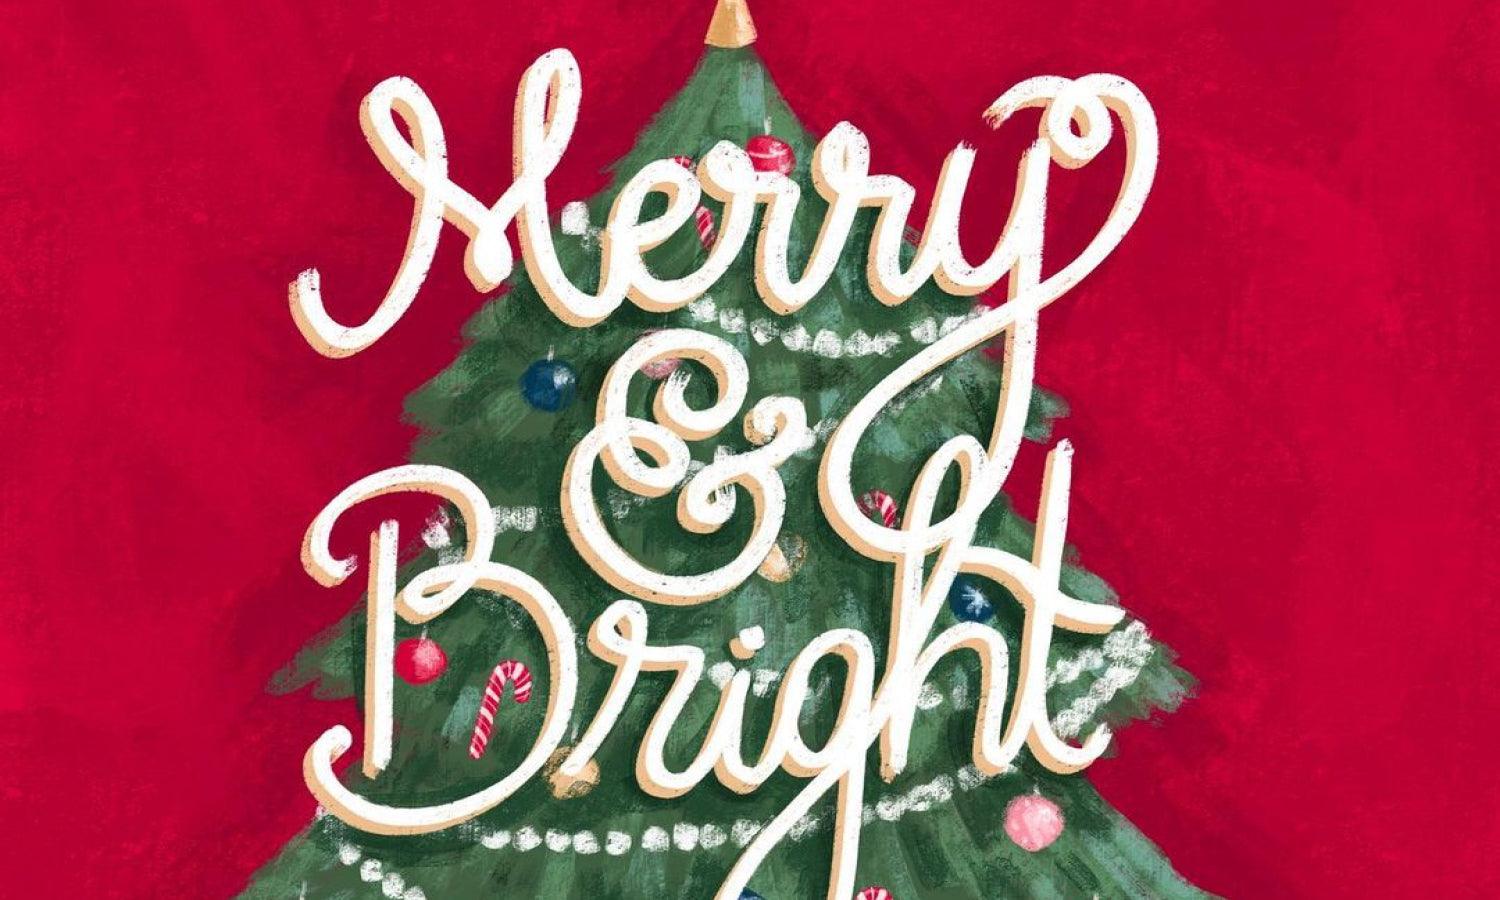 30 Best Examples of Christmas Typography Artworks - Kreafolk